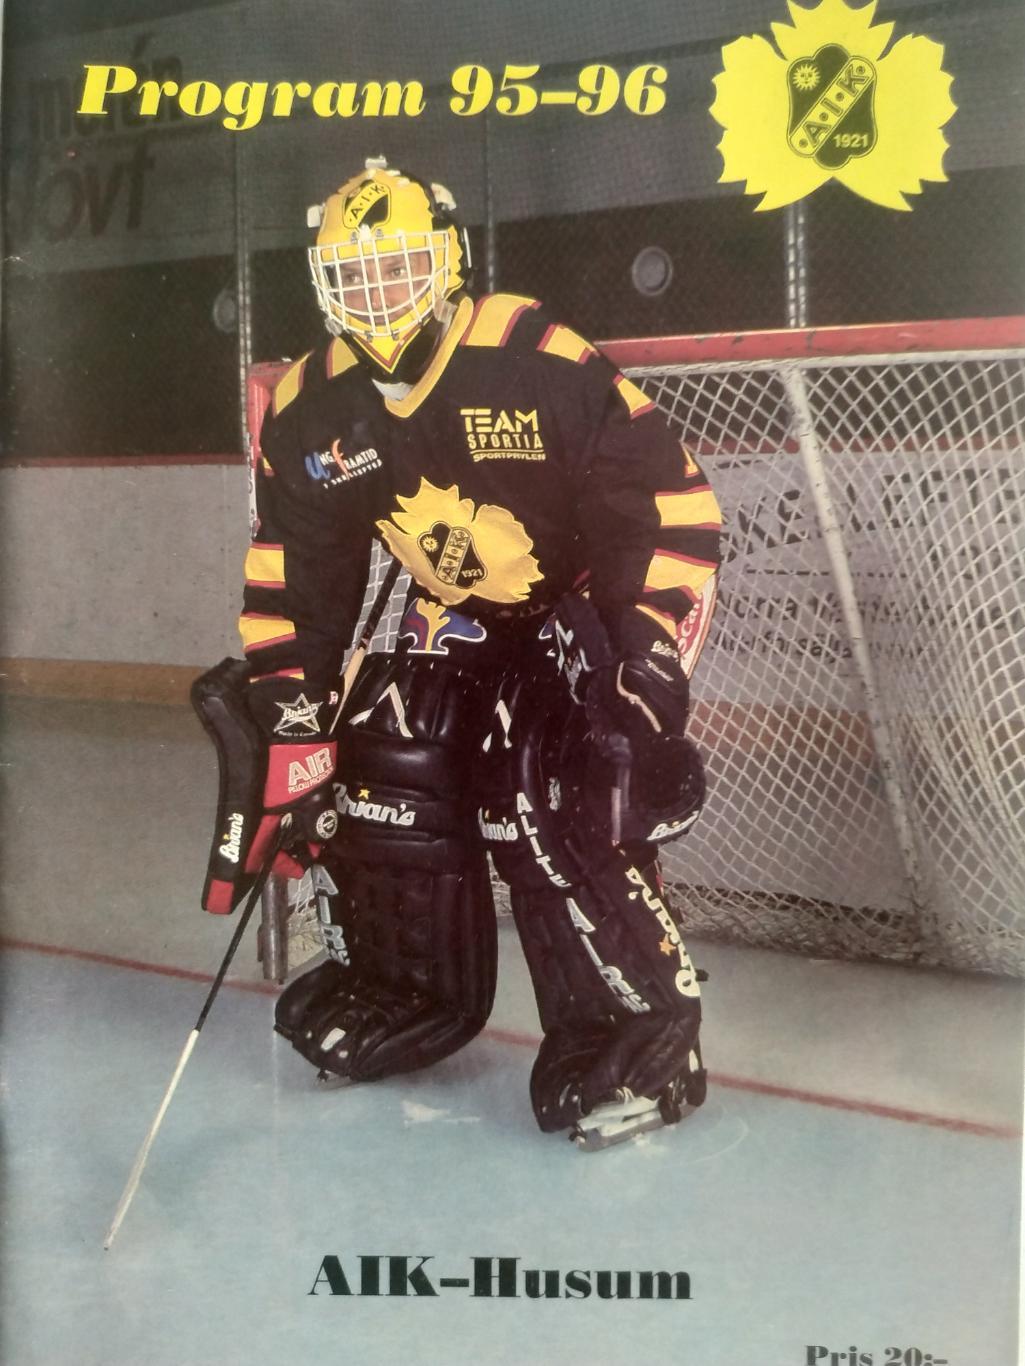 ХОККЕЙ ПРОГРАММА МАТЧА НХЛ NHL 1995-96 SKELLEFTEA AIK VS. HUSUM IF PROGRAM GAME